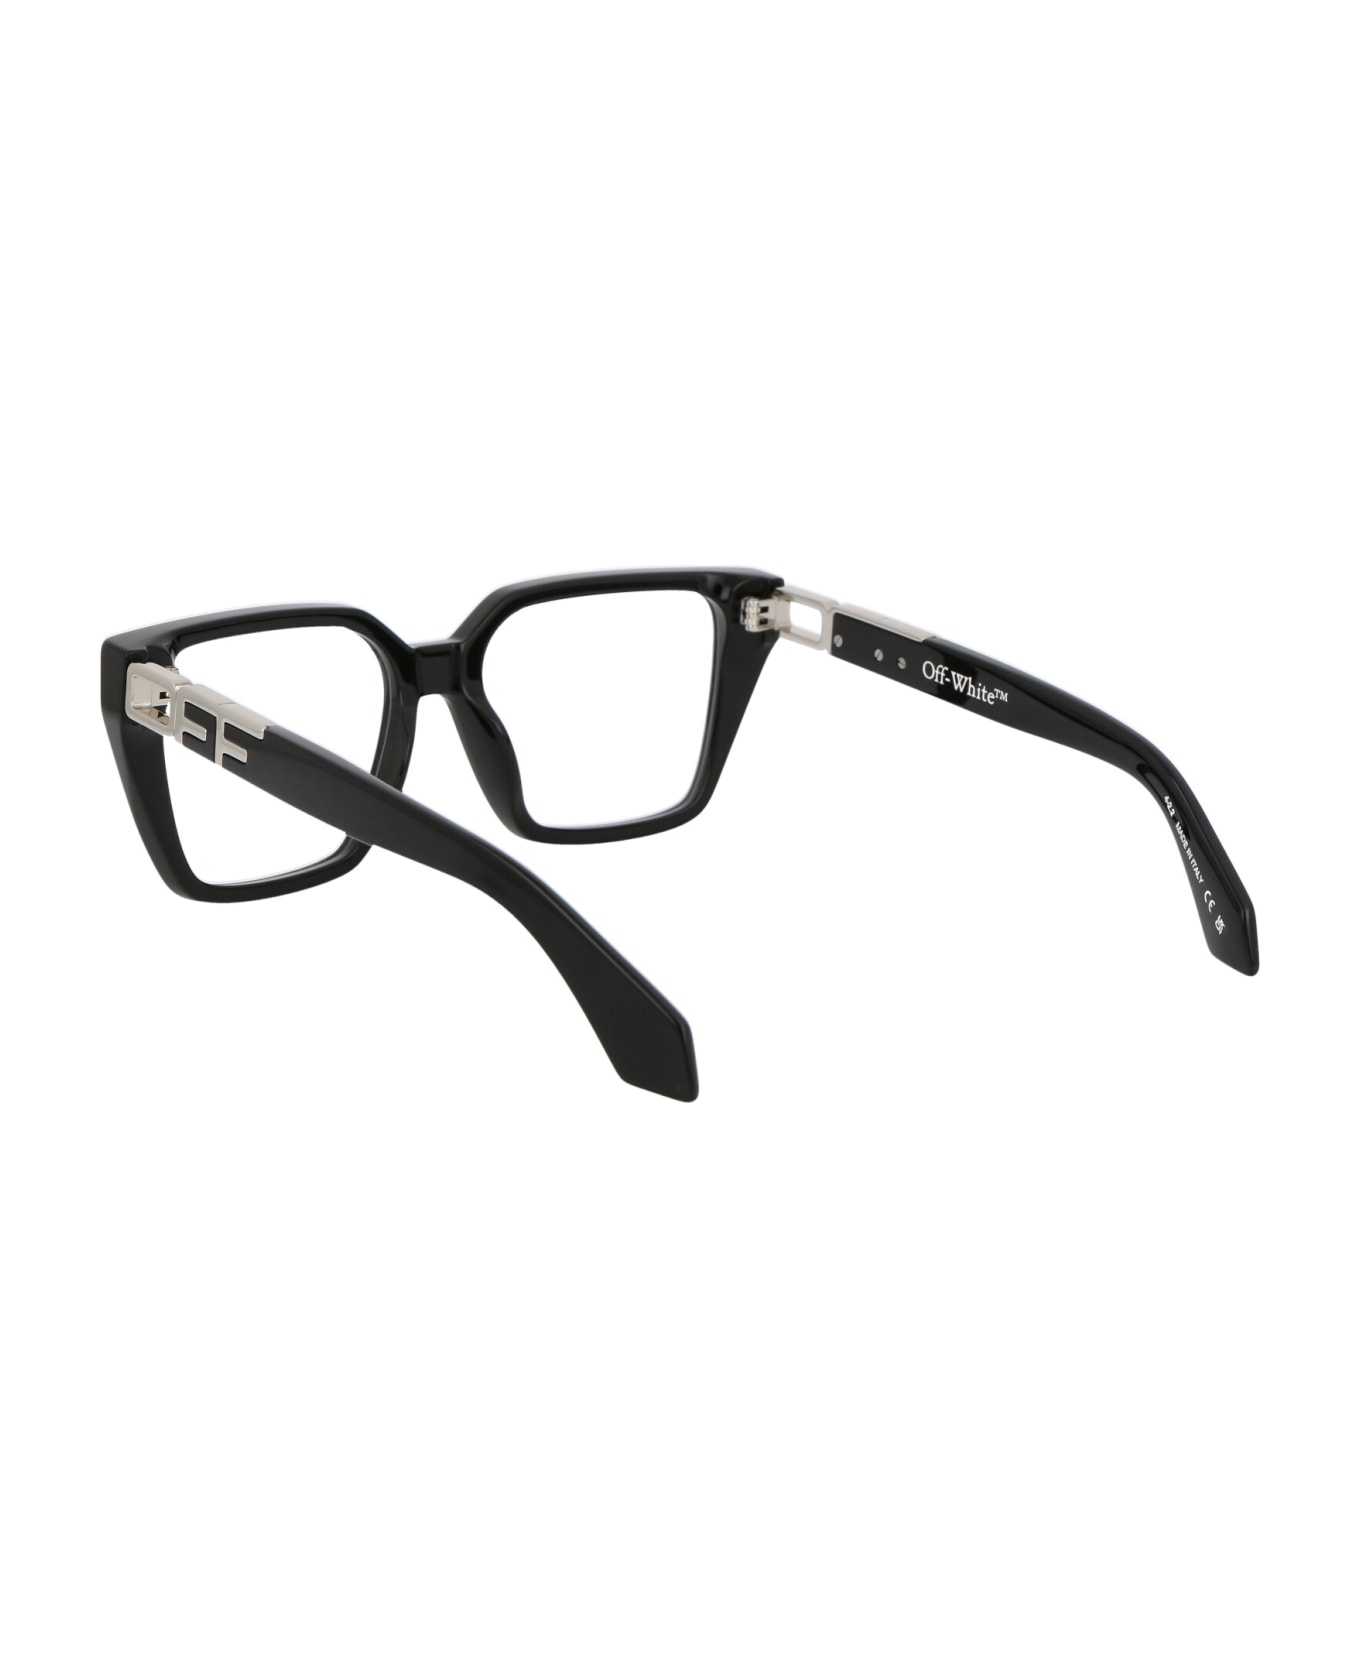 Off-White Optical Style 29 Glasses - 1000 BLACK BLUE BLOCK